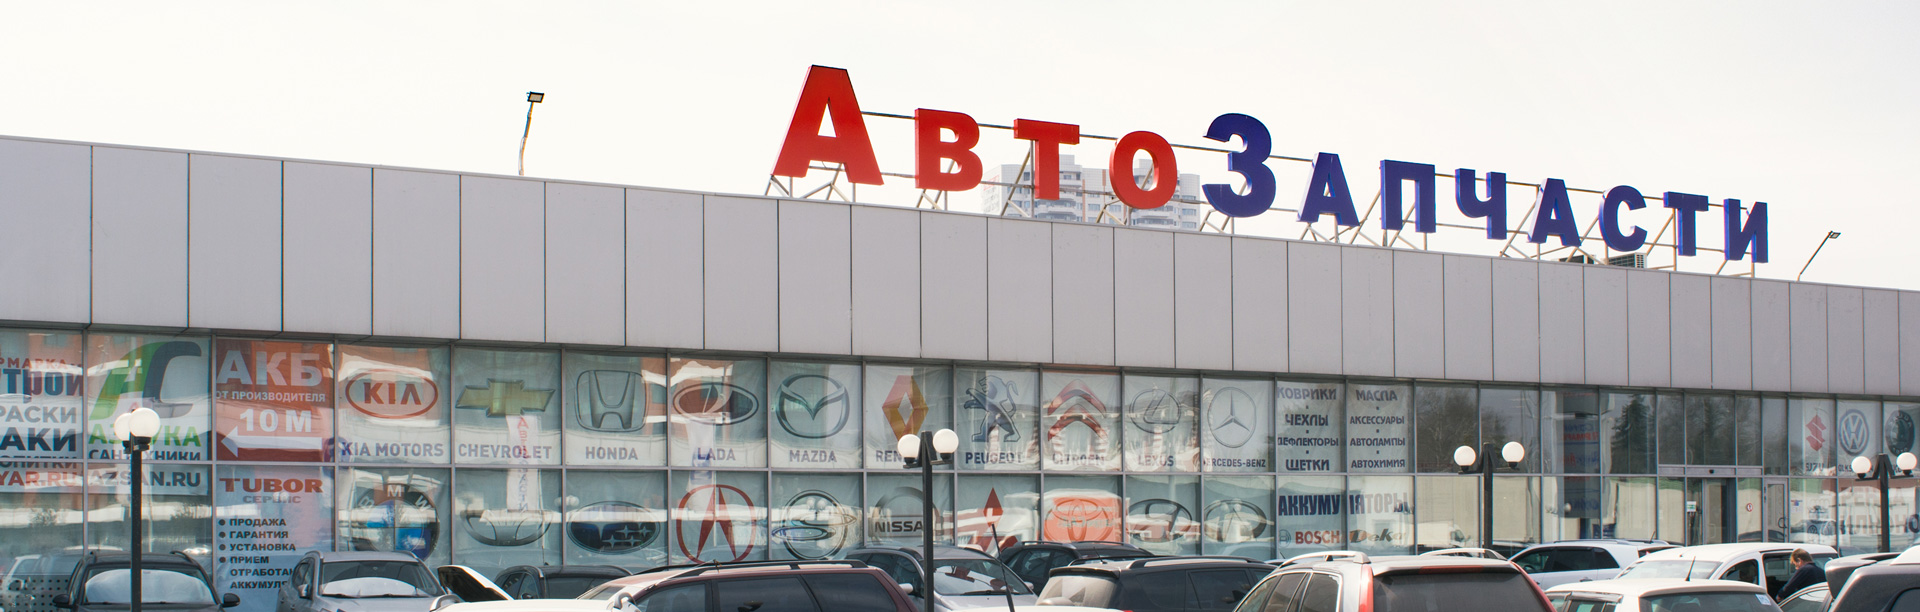 Фасад торгового комплекса «АвтоЗапчасти М-1»